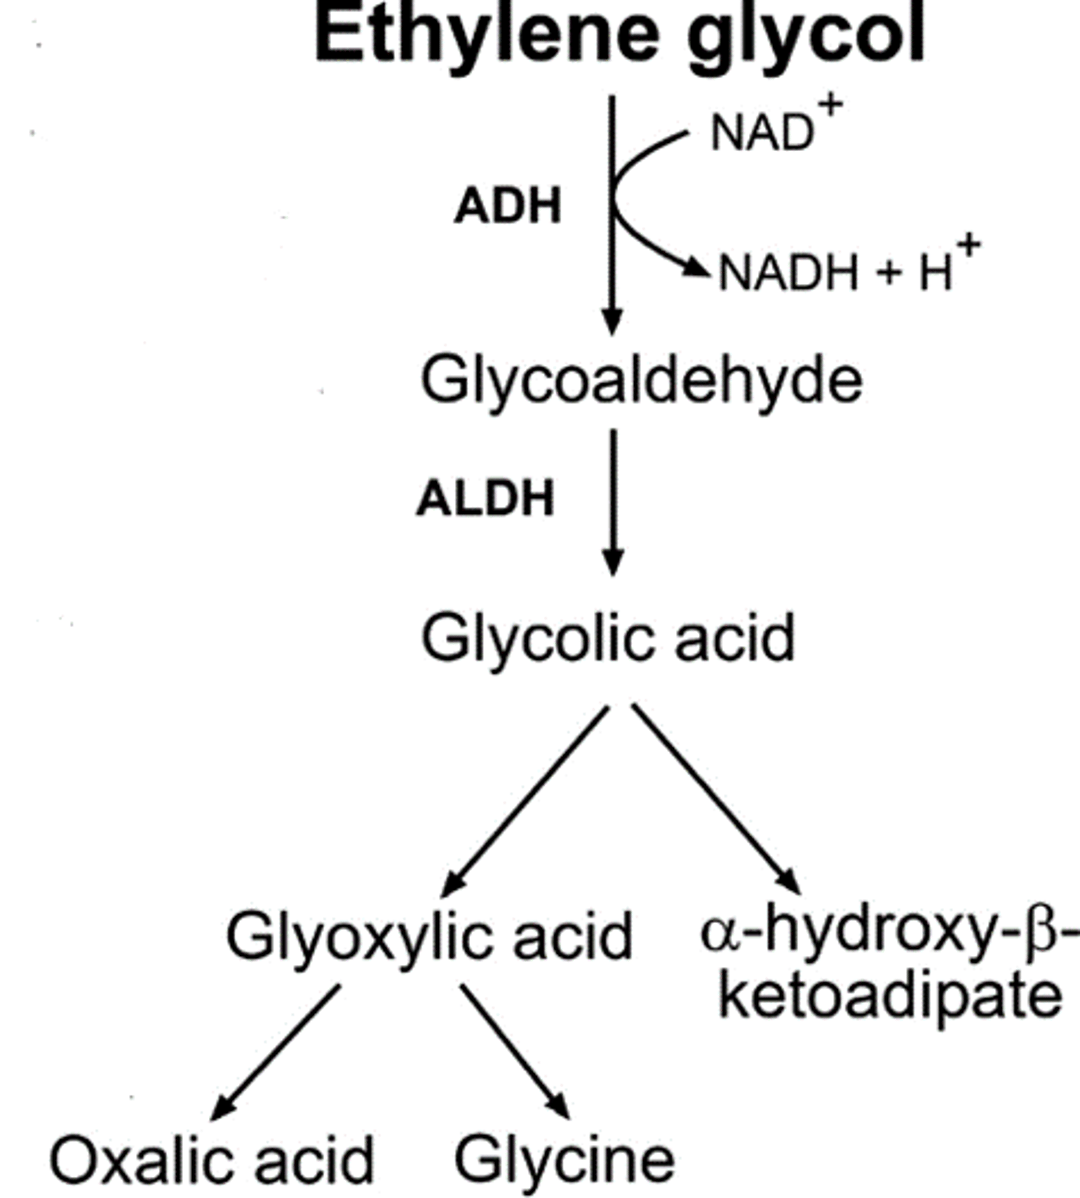 Metabolism of ethylene glycol